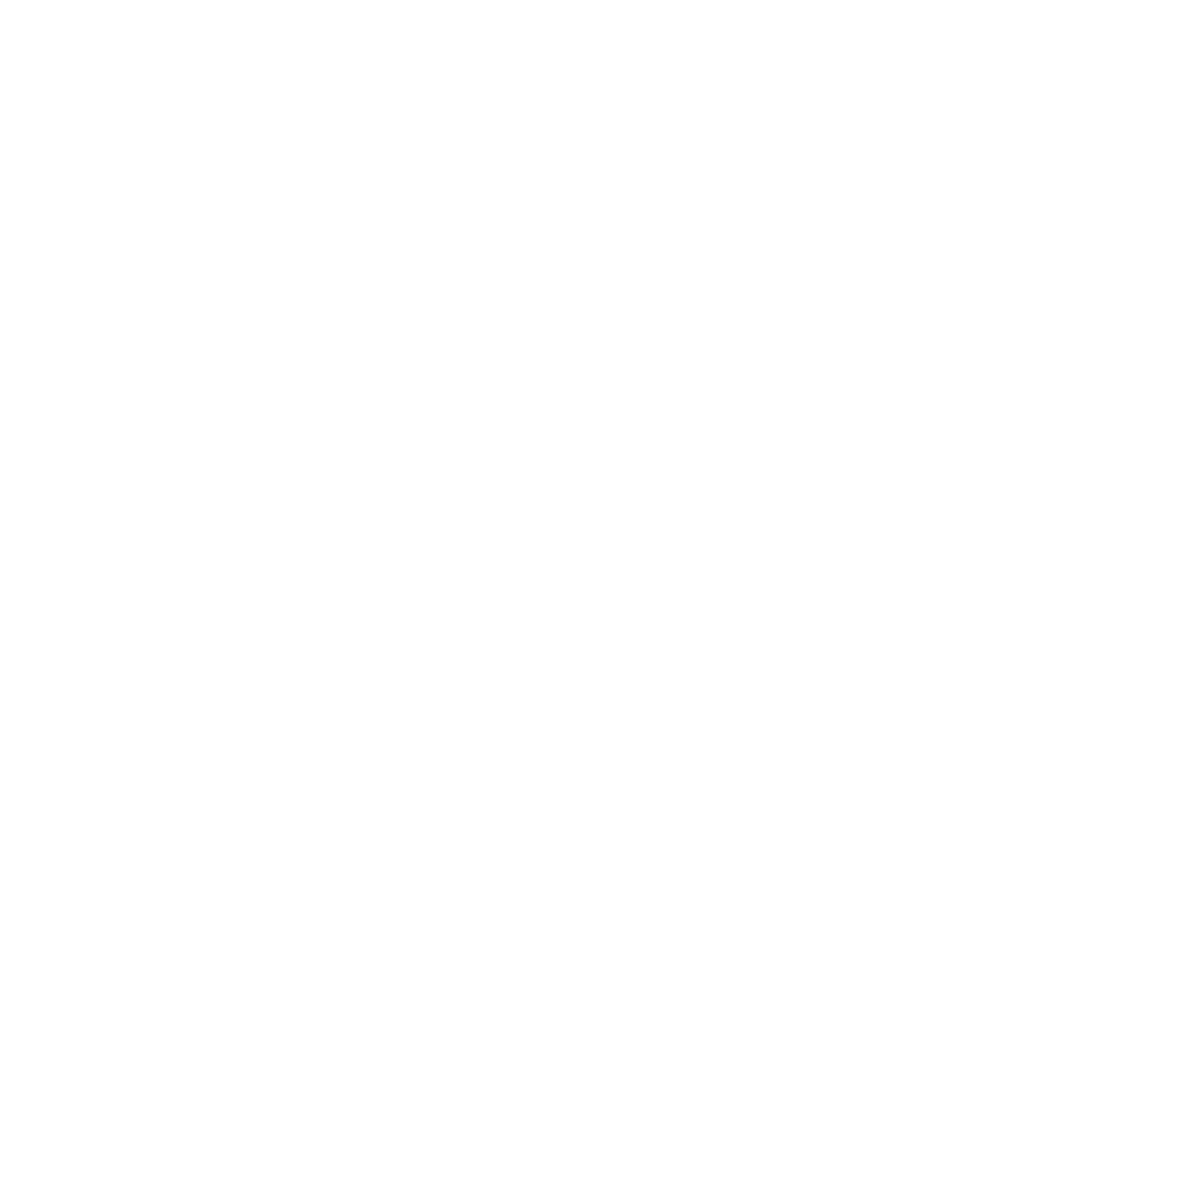 richland county logo 